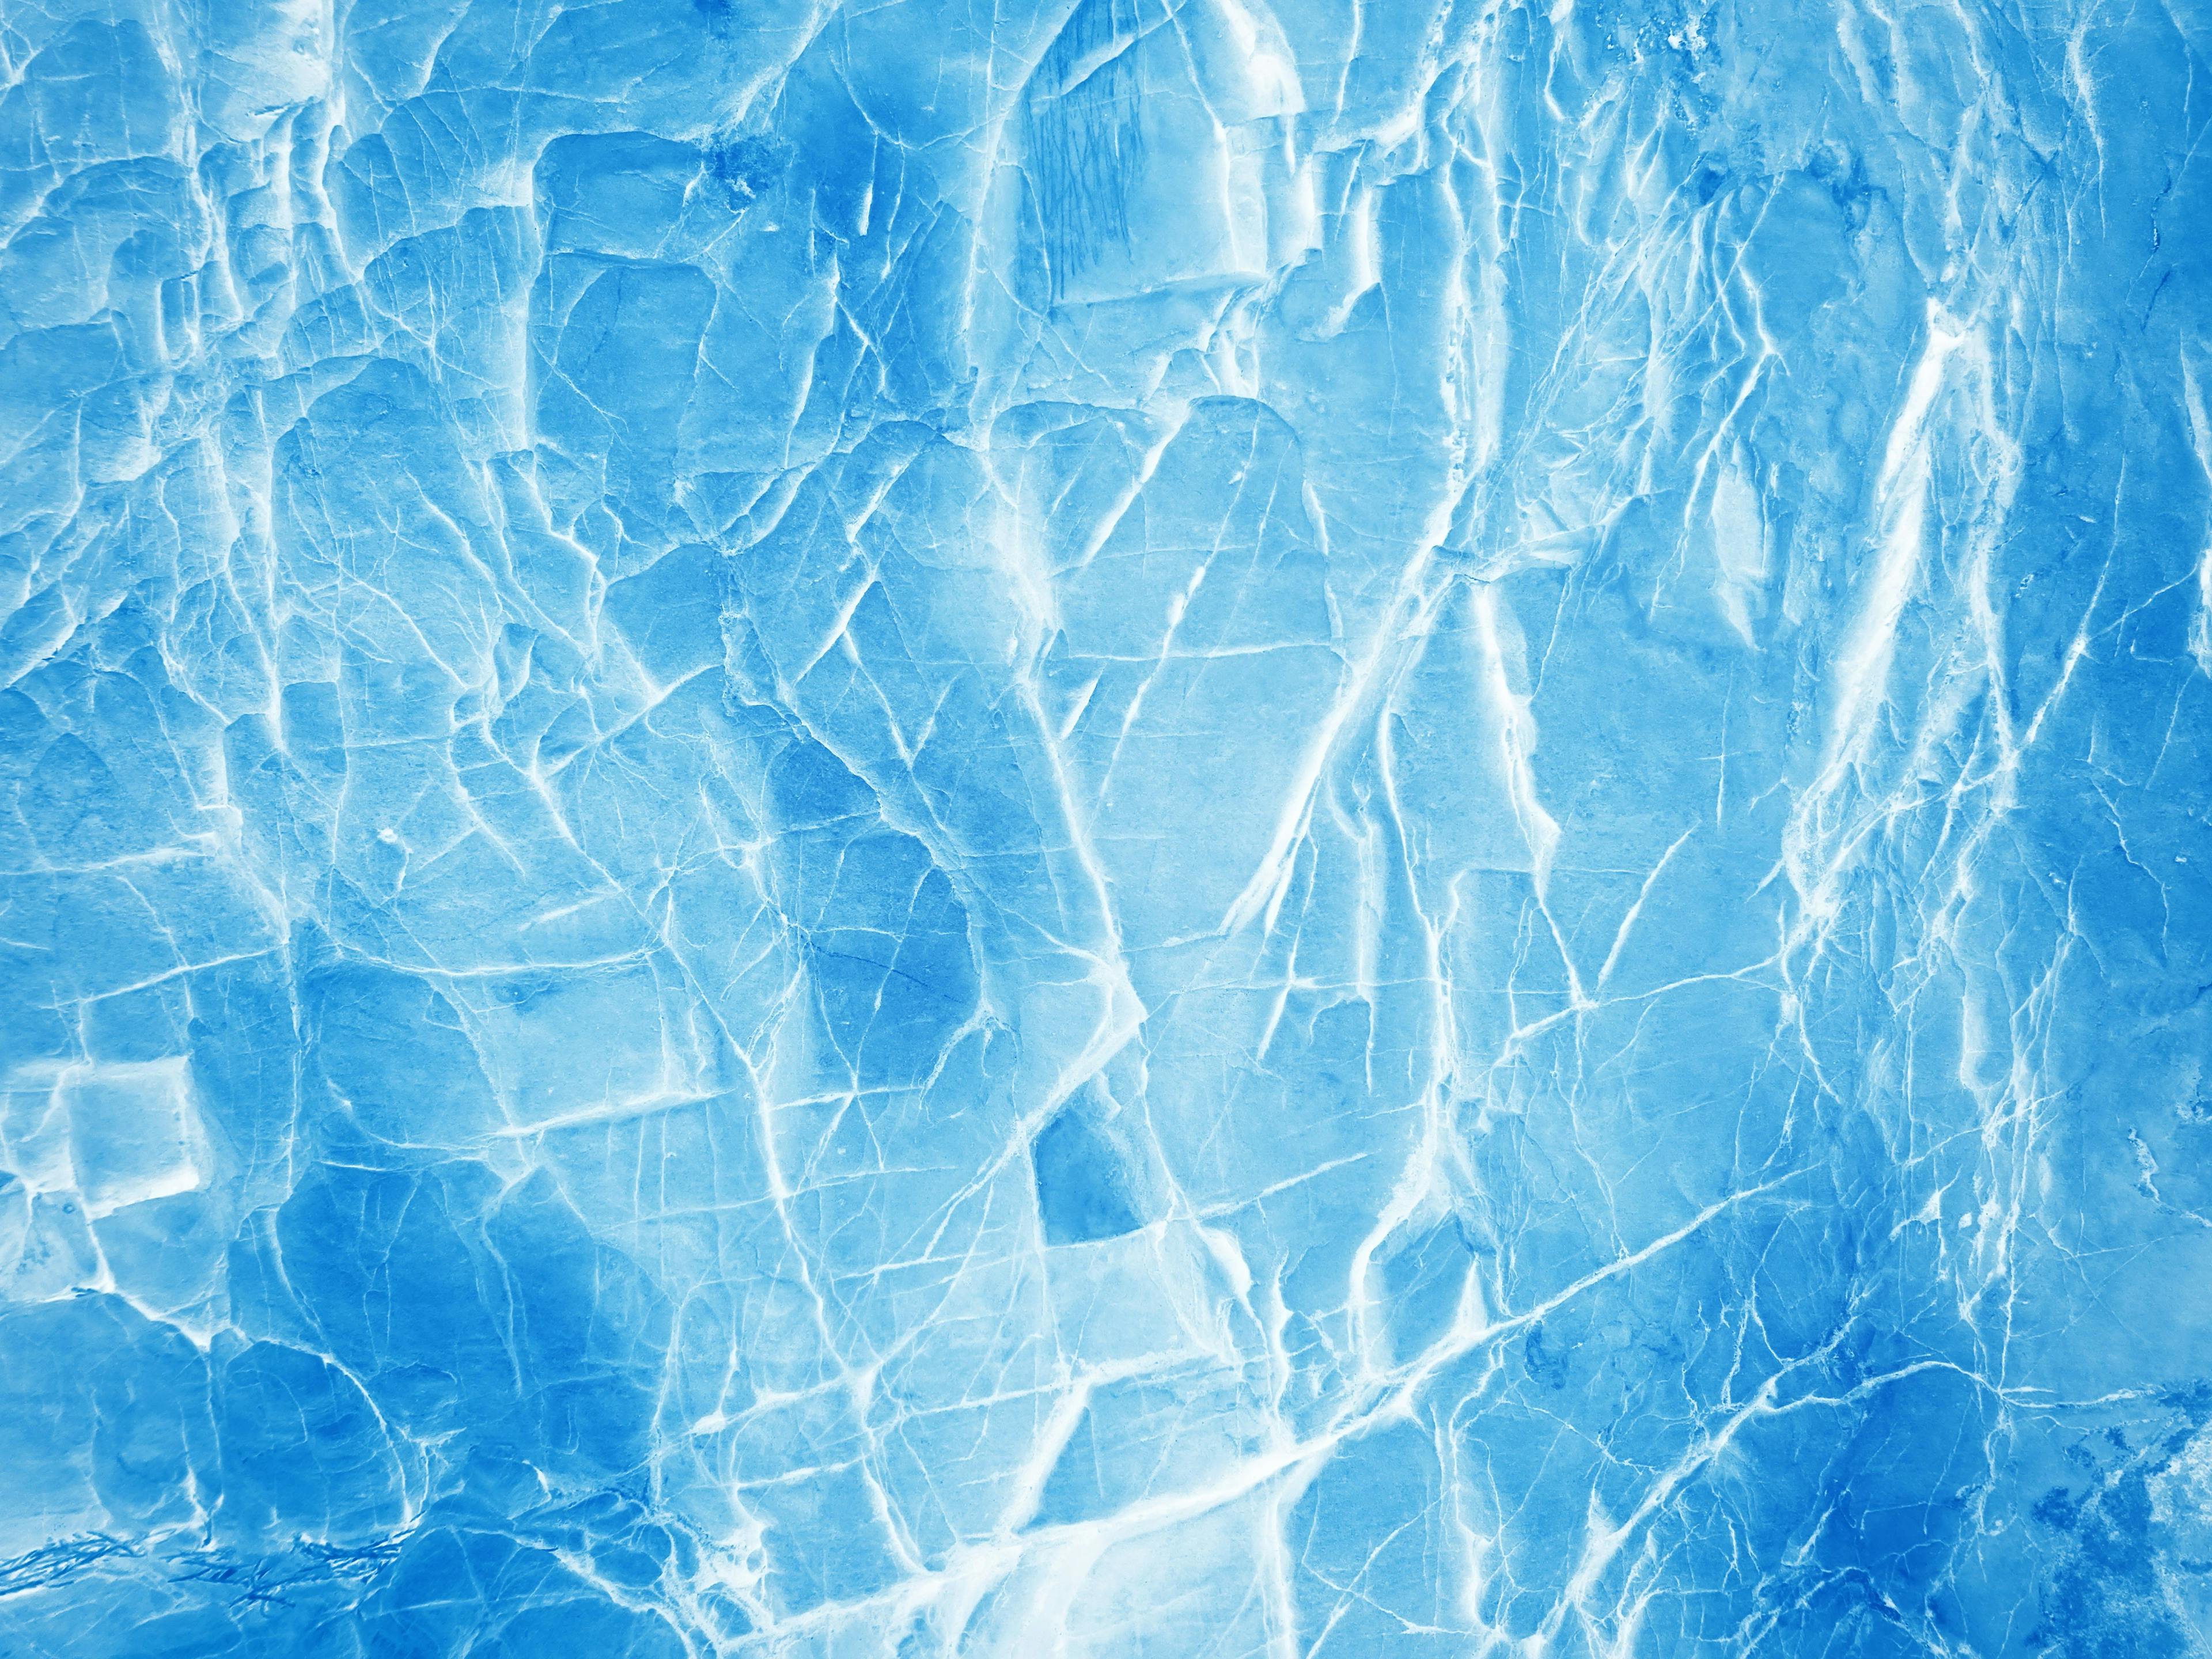 Abstract ice texture | Image Credit: © slay19 - stock.adobe.com